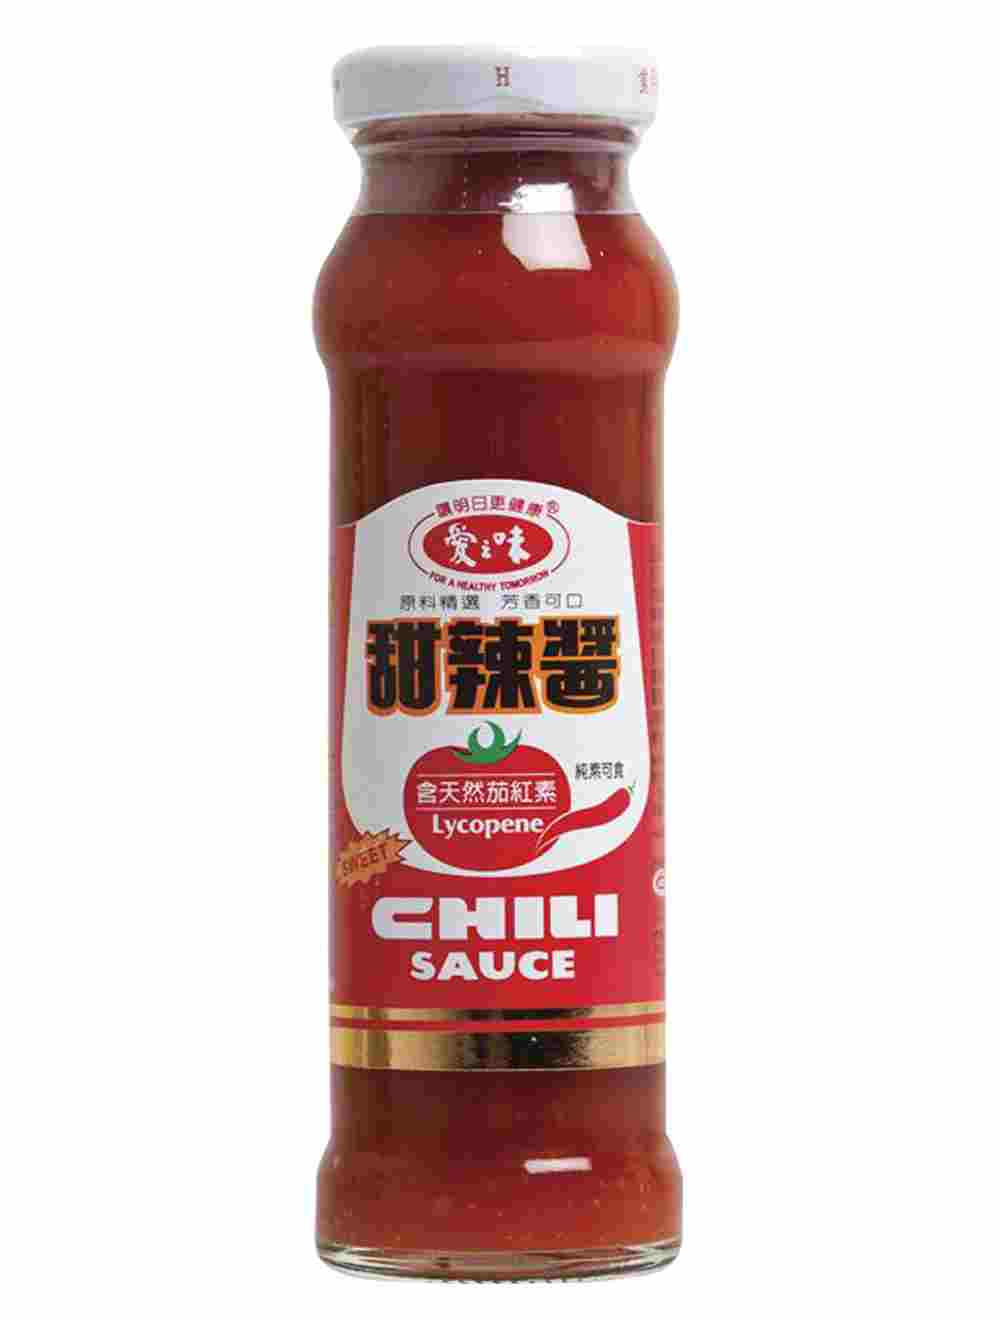 Image AGV Sweet Chili Sauce 爱之味-甜辣酱 160grams